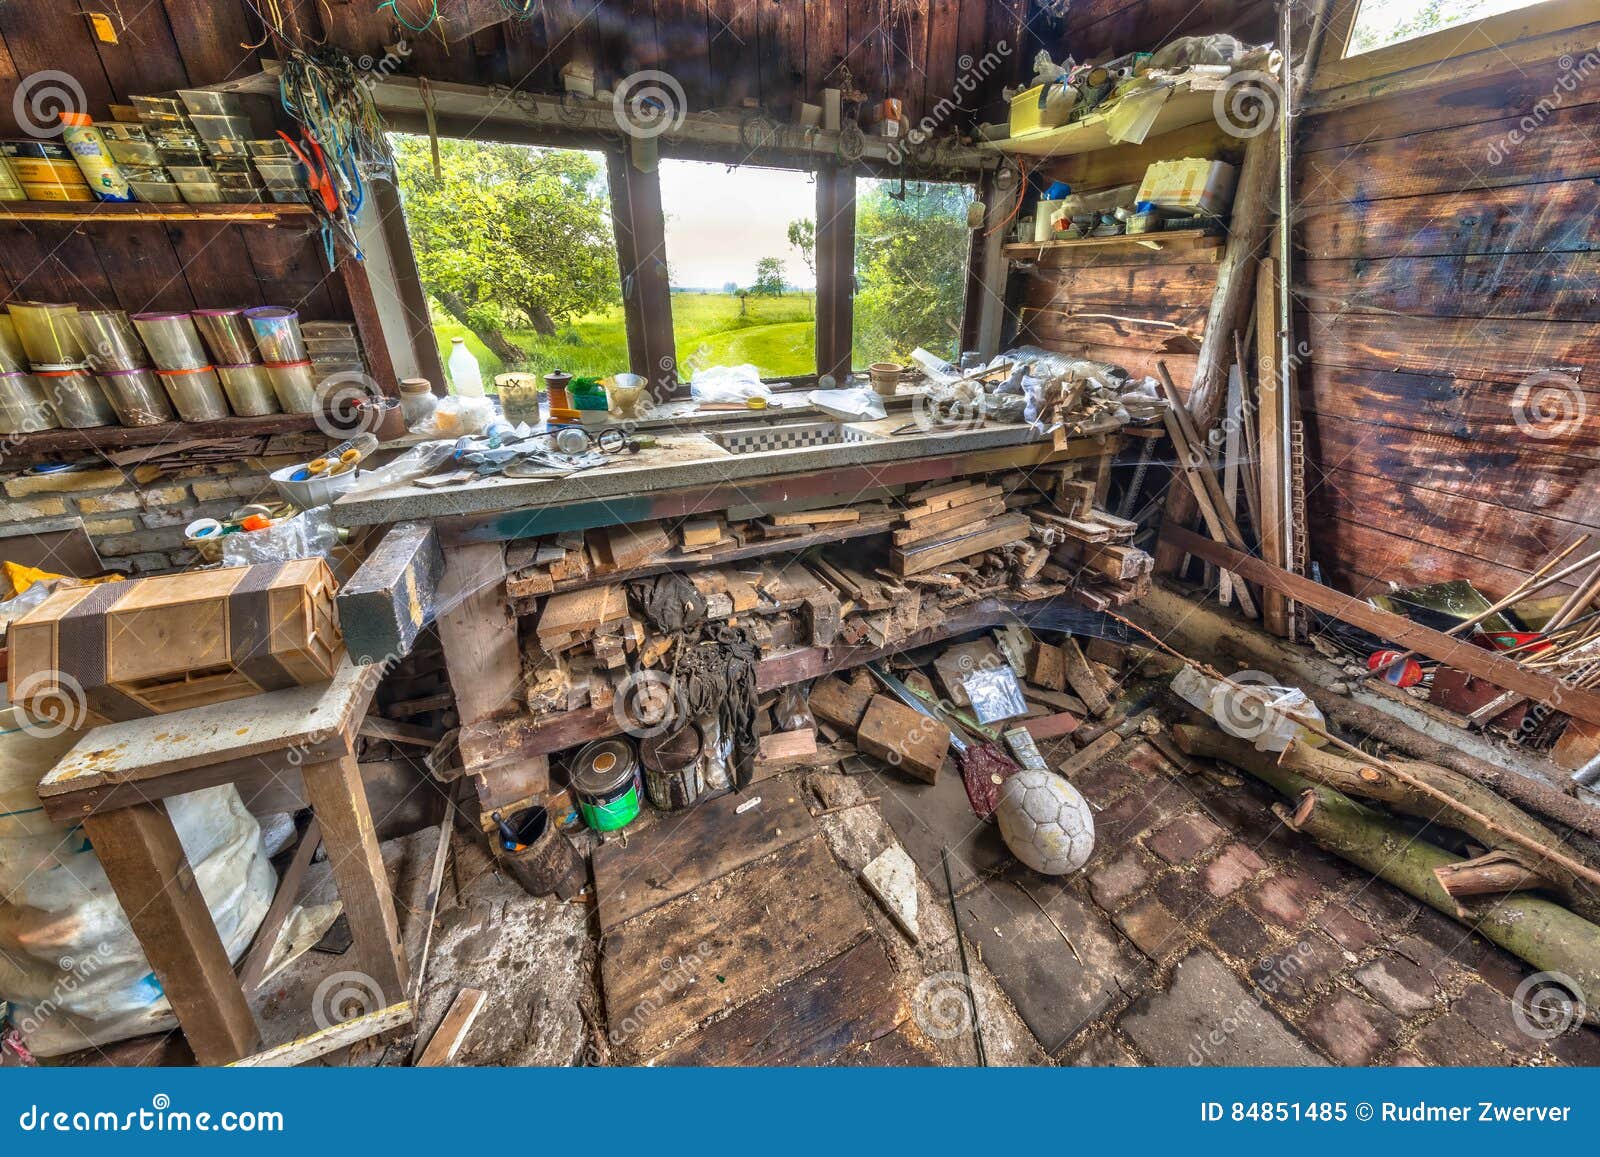 very-messy-workbench-compulsive-hoarder-wooden-barn-diagnose-hoarding-84851485.jpg